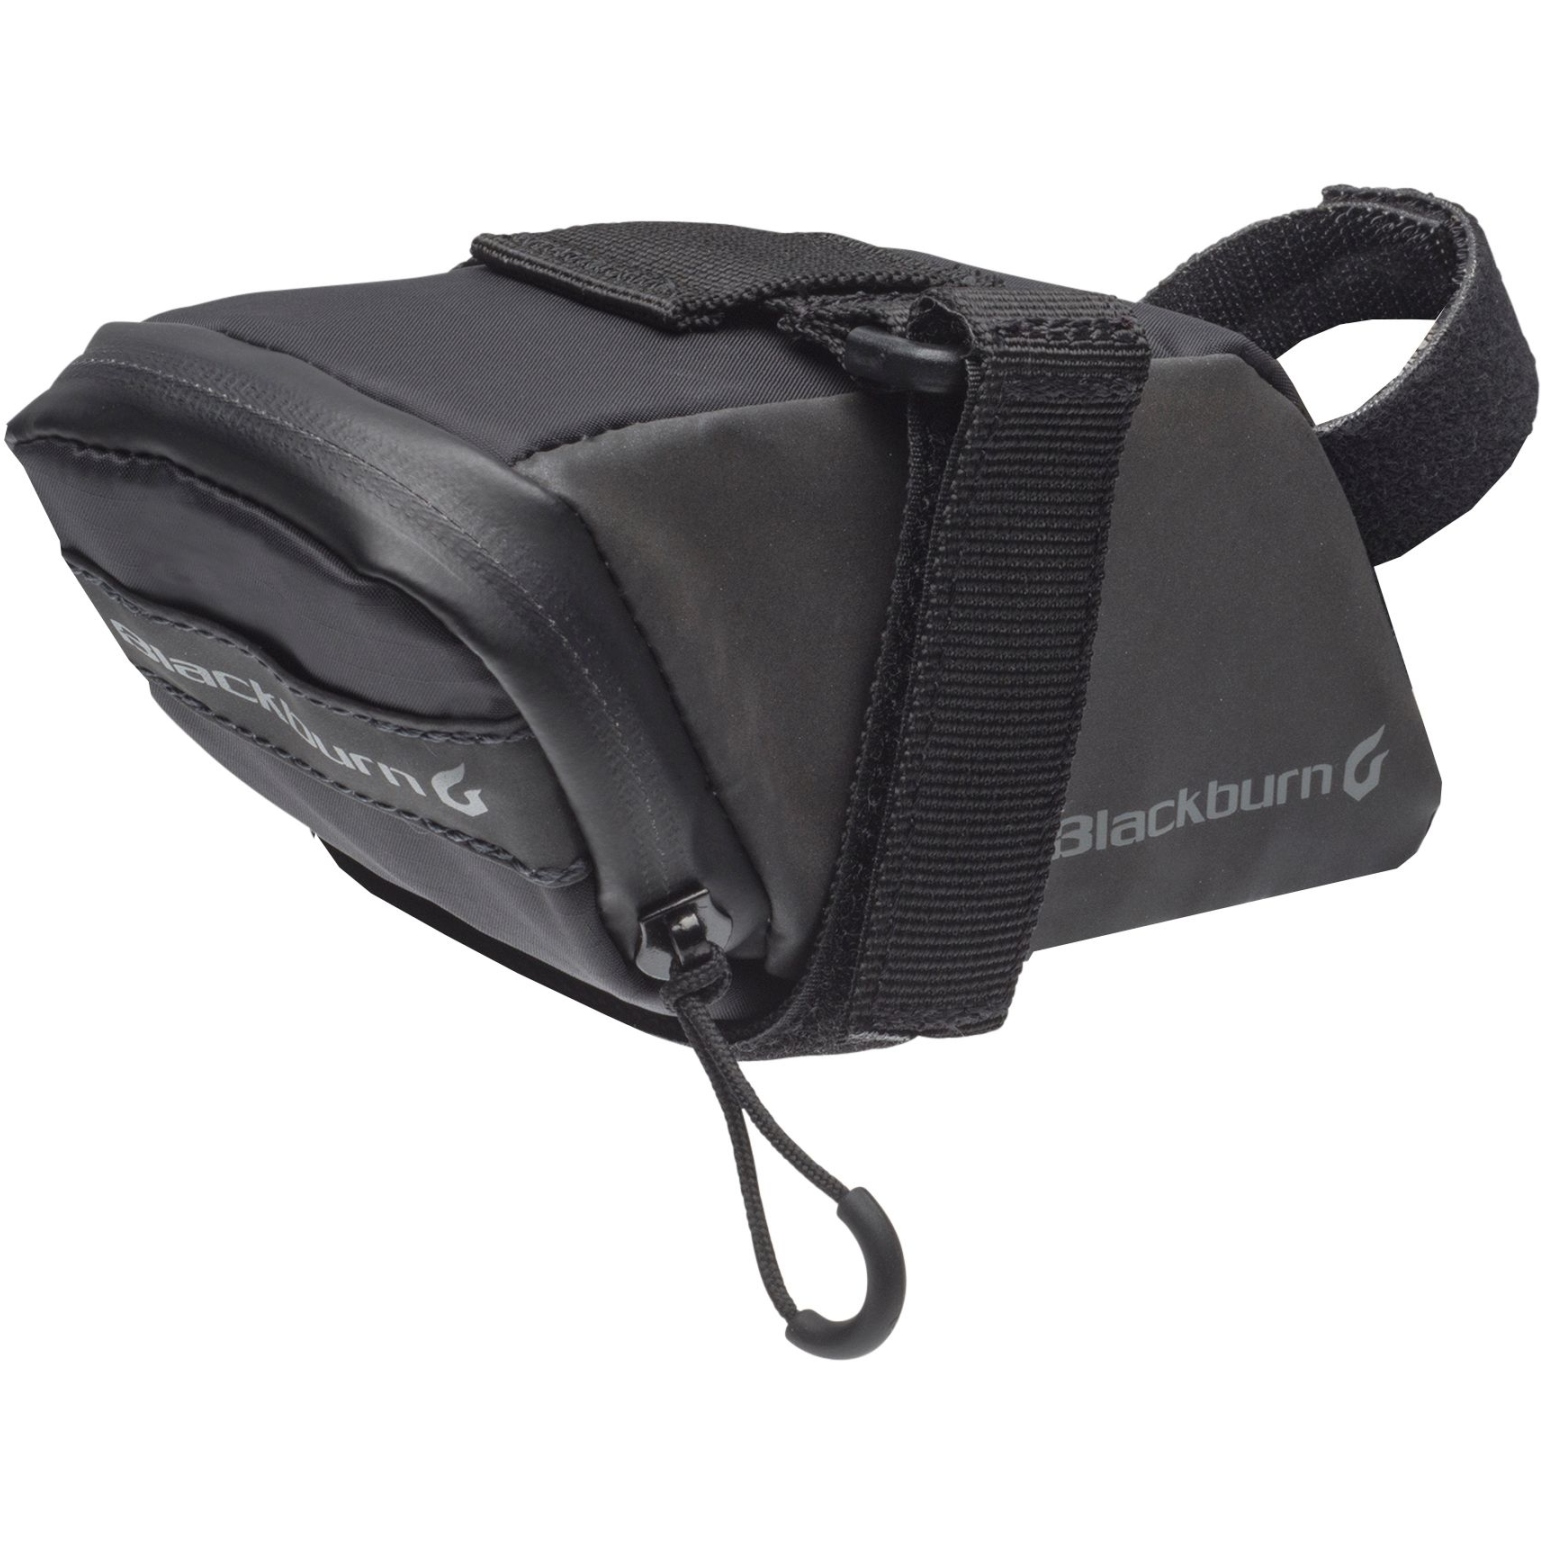 Picture of Blackburn Grid Small Seat Bag - black reflective